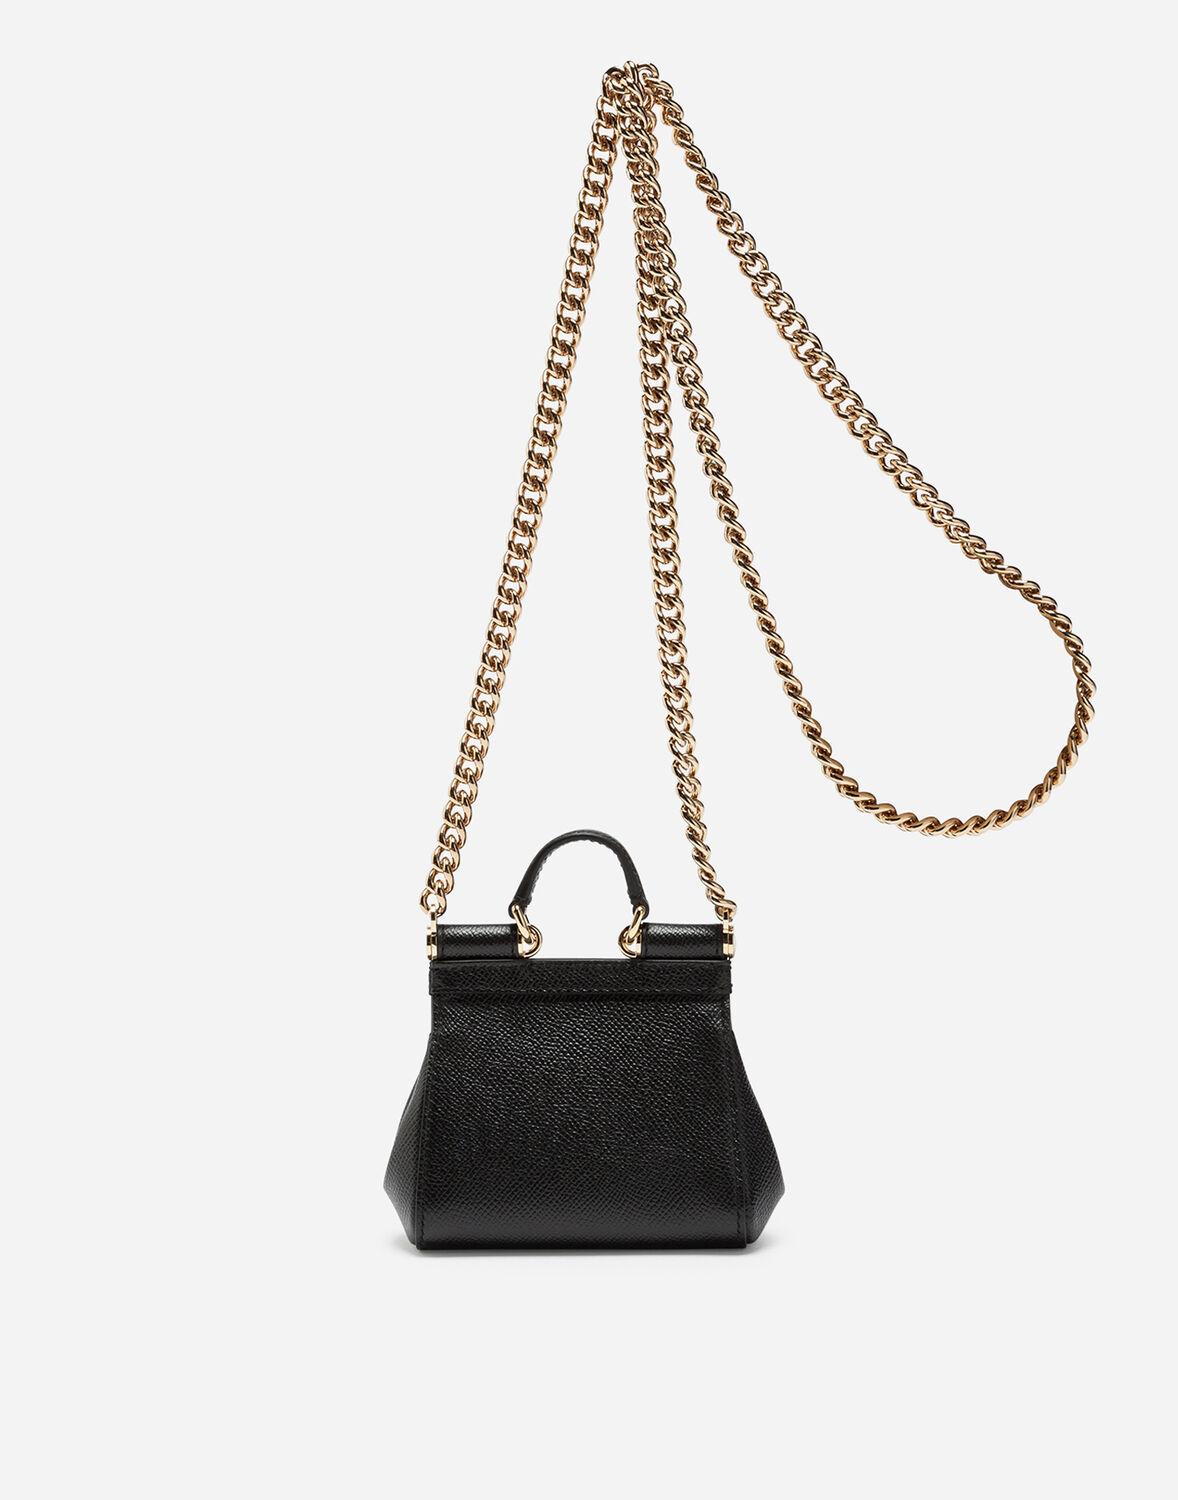 Dolce \u0026 Gabbana Leather Sicily Handbag 